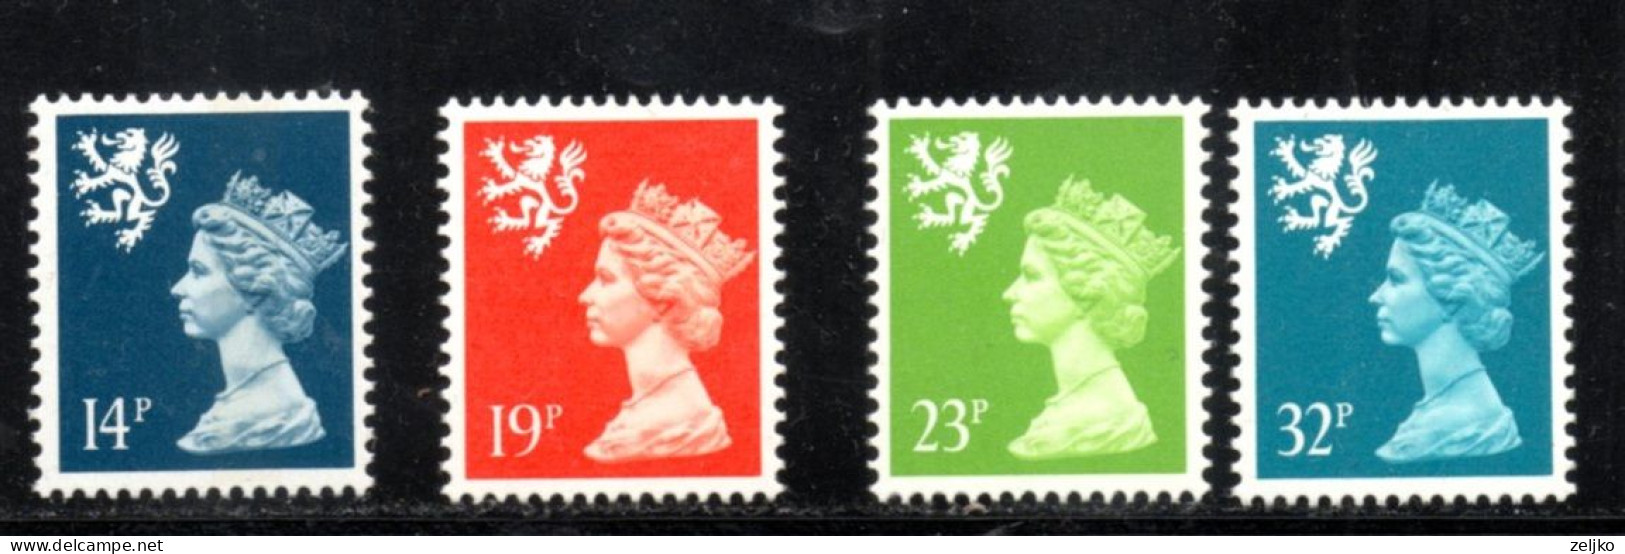 UK, GB, Great Britain, Regional Issue, Scotland, MNH, 1988, Michel 49 - 52, Queen Elizabeth - Scotland